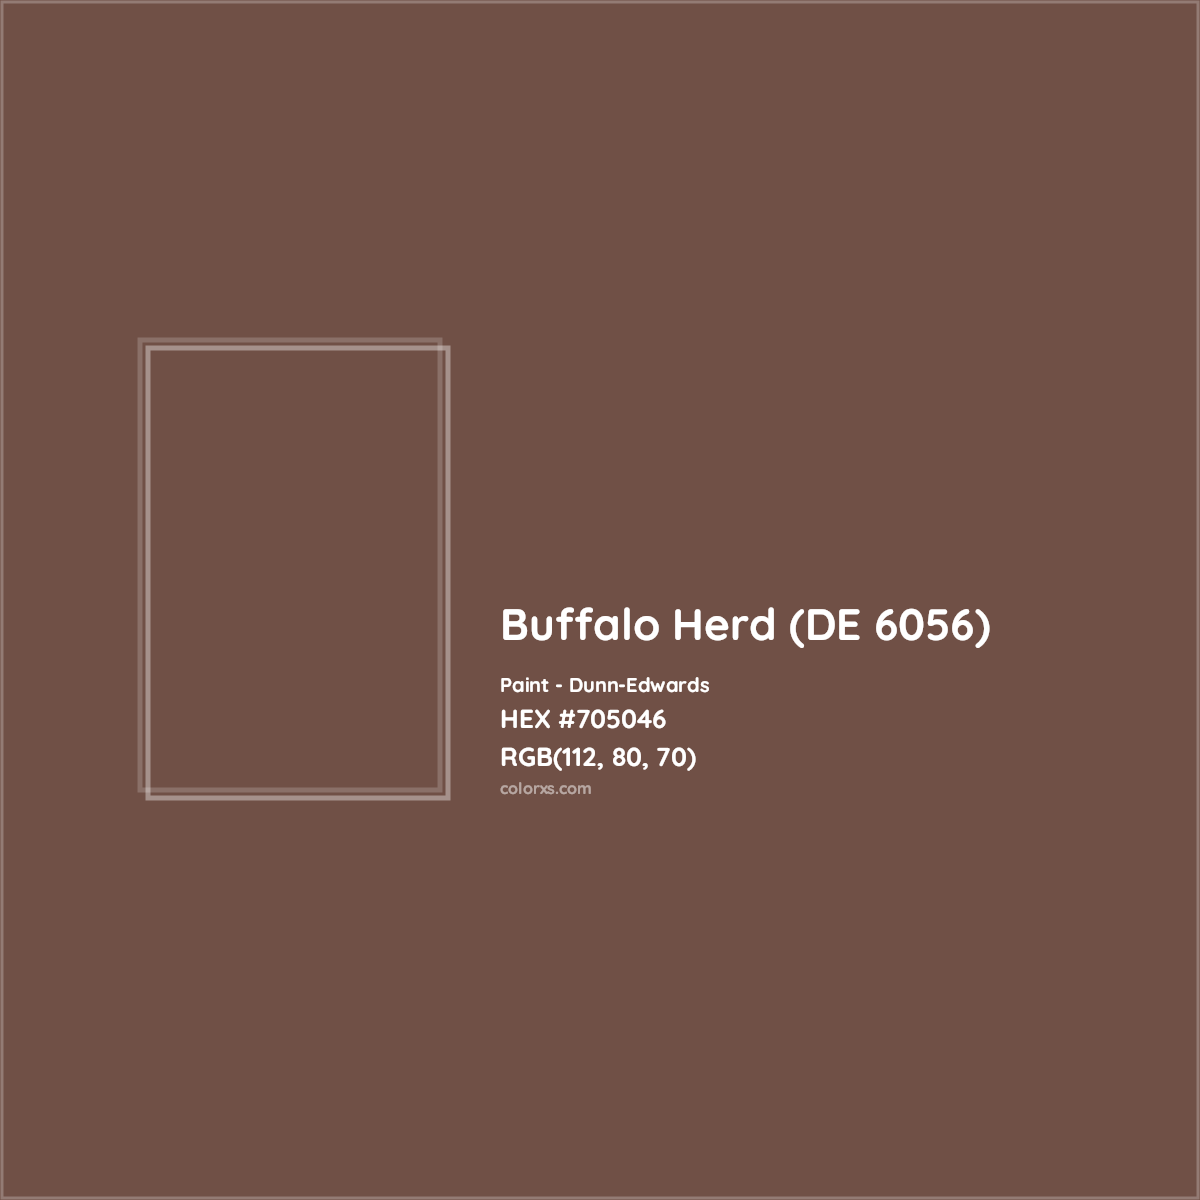 HEX #705046 Buffalo Herd (DE 6056) Paint Dunn-Edwards - Color Code